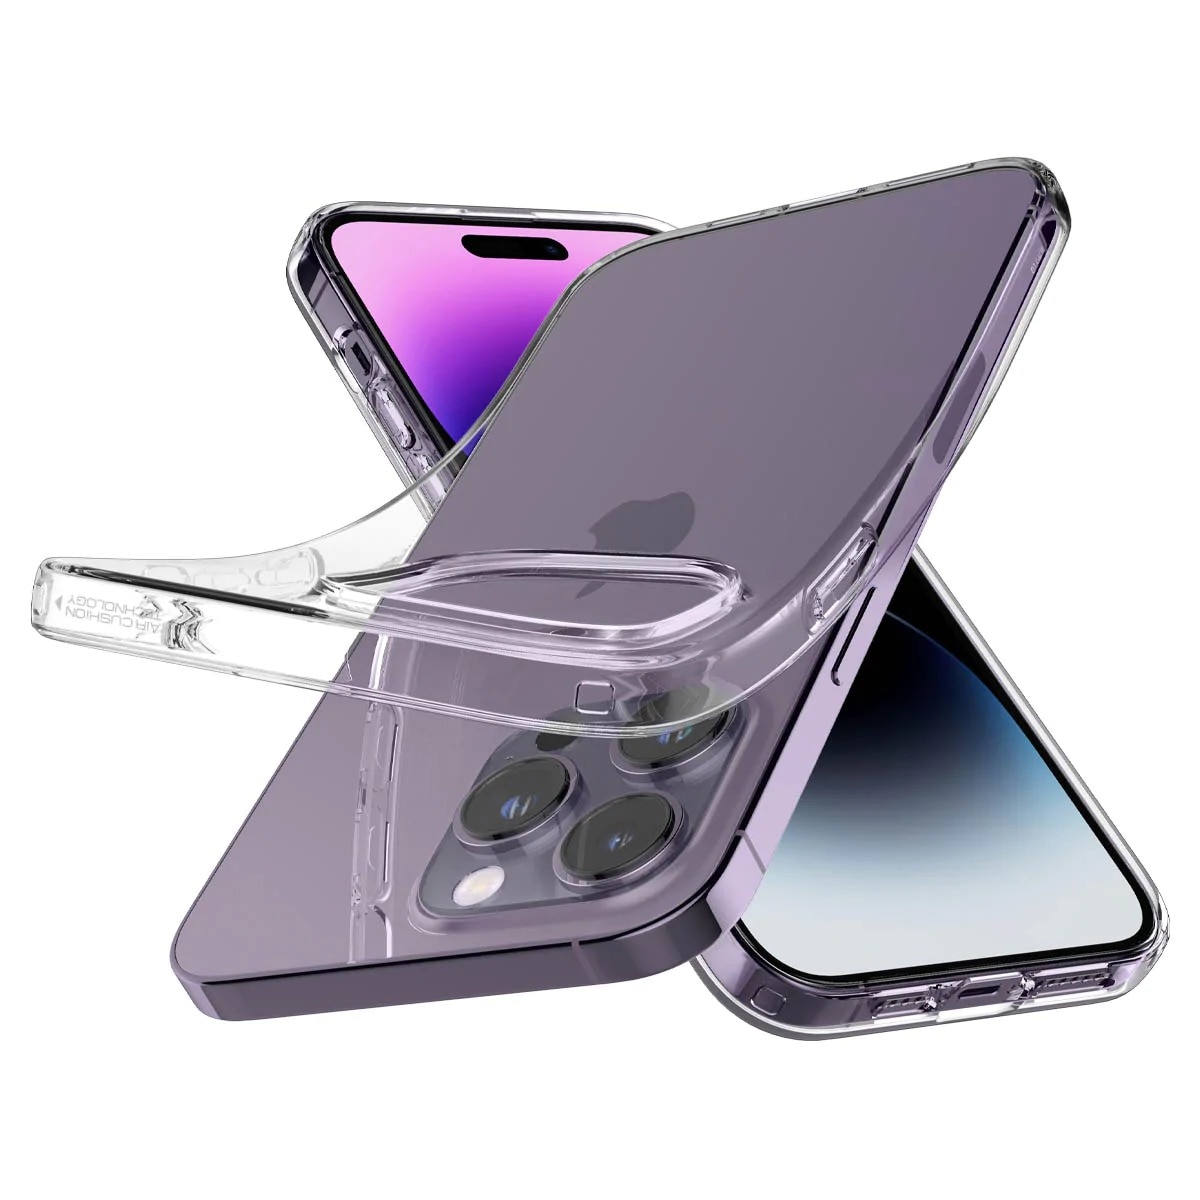 Coque Liquid iPhone 14 Pro Max Crystal Clear